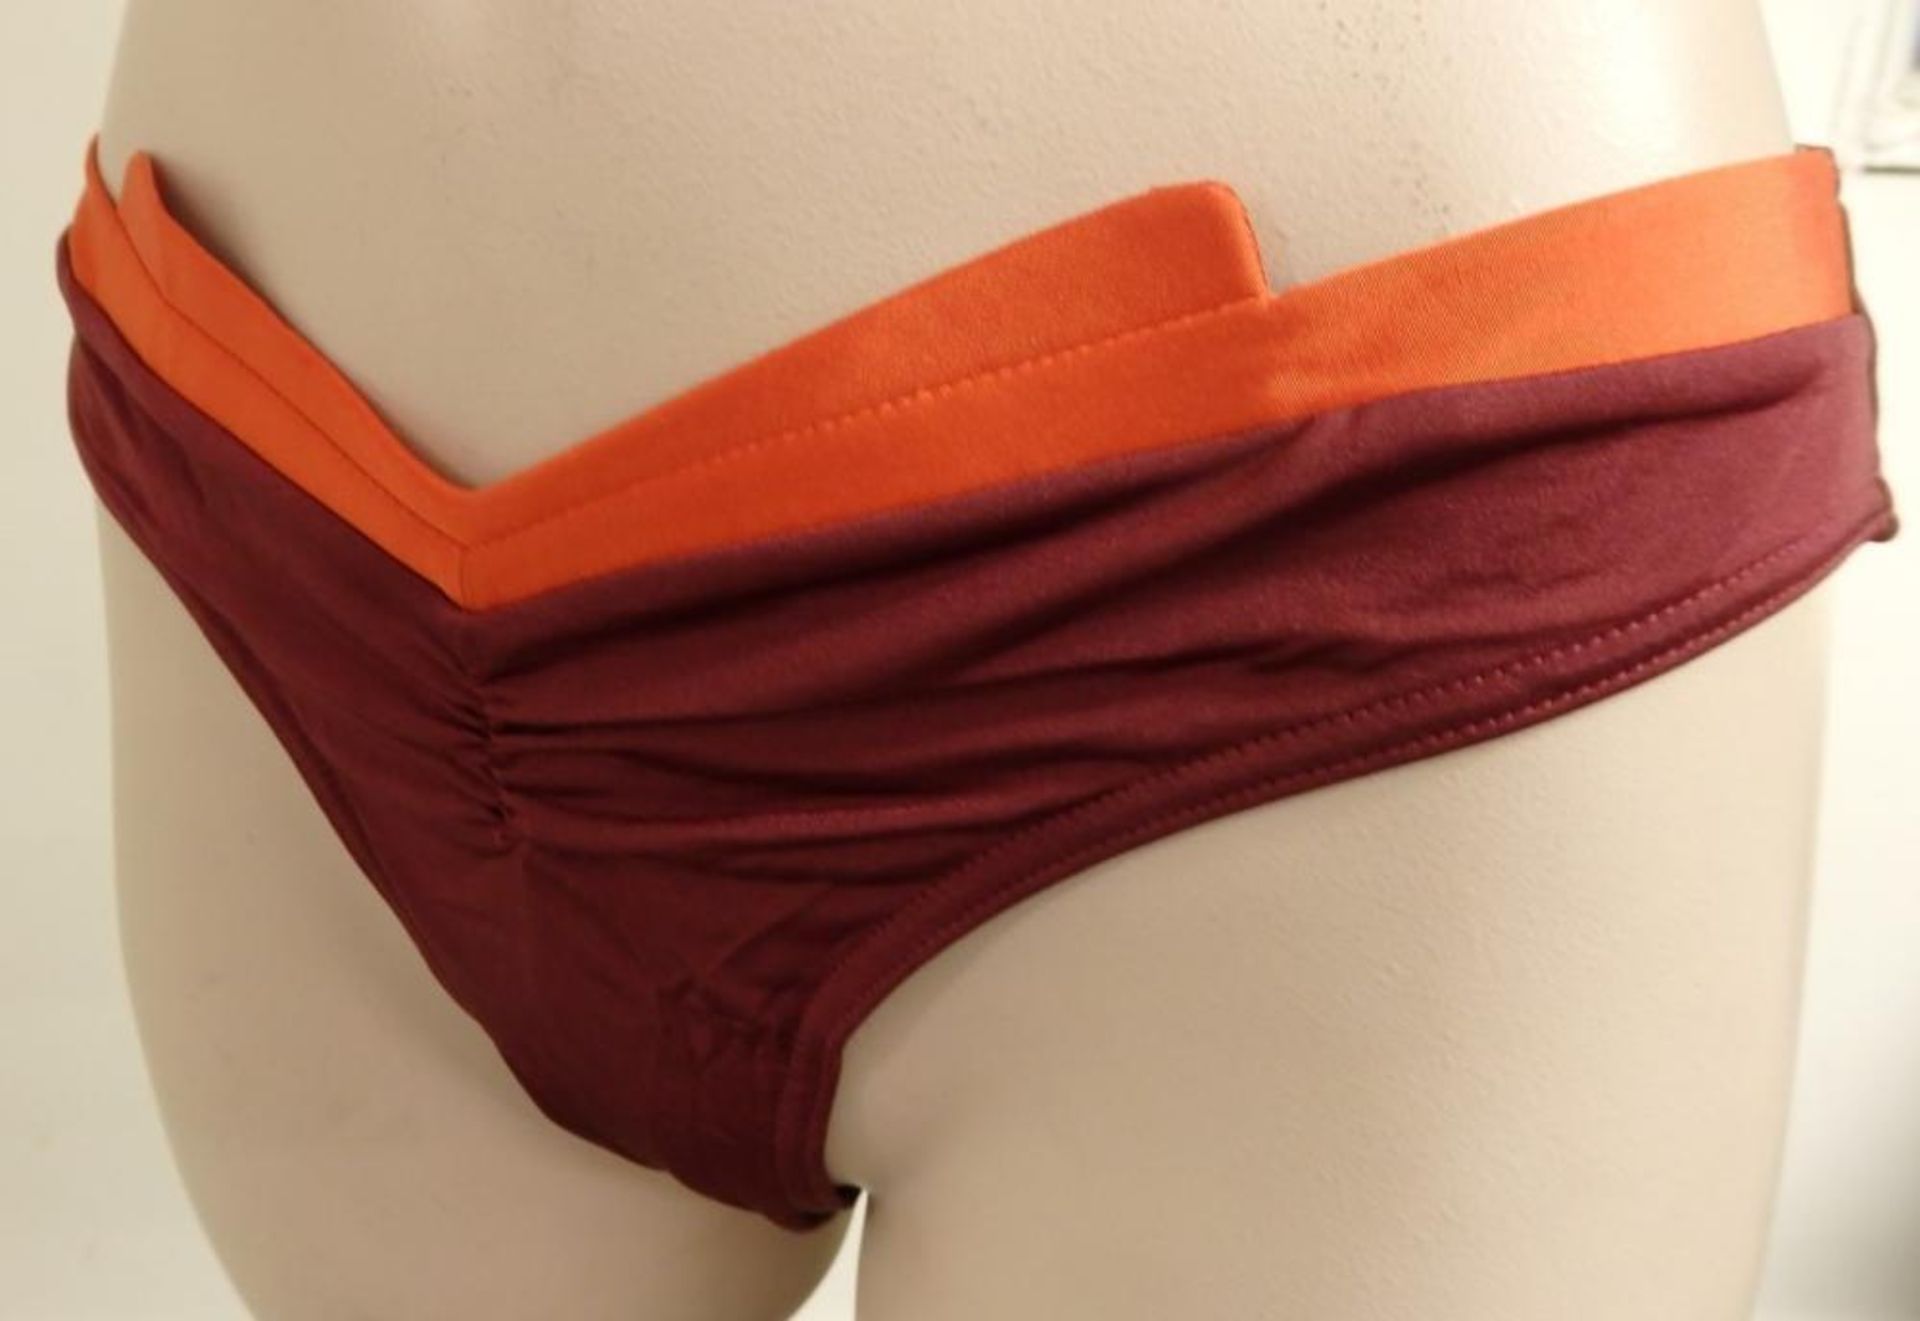 1 x Rasurel - Damson and Orange trim Bikini - R20346 Brassiere - Mini Slip - Size 2C - UK 32 - Fr 85 - Image 2 of 6